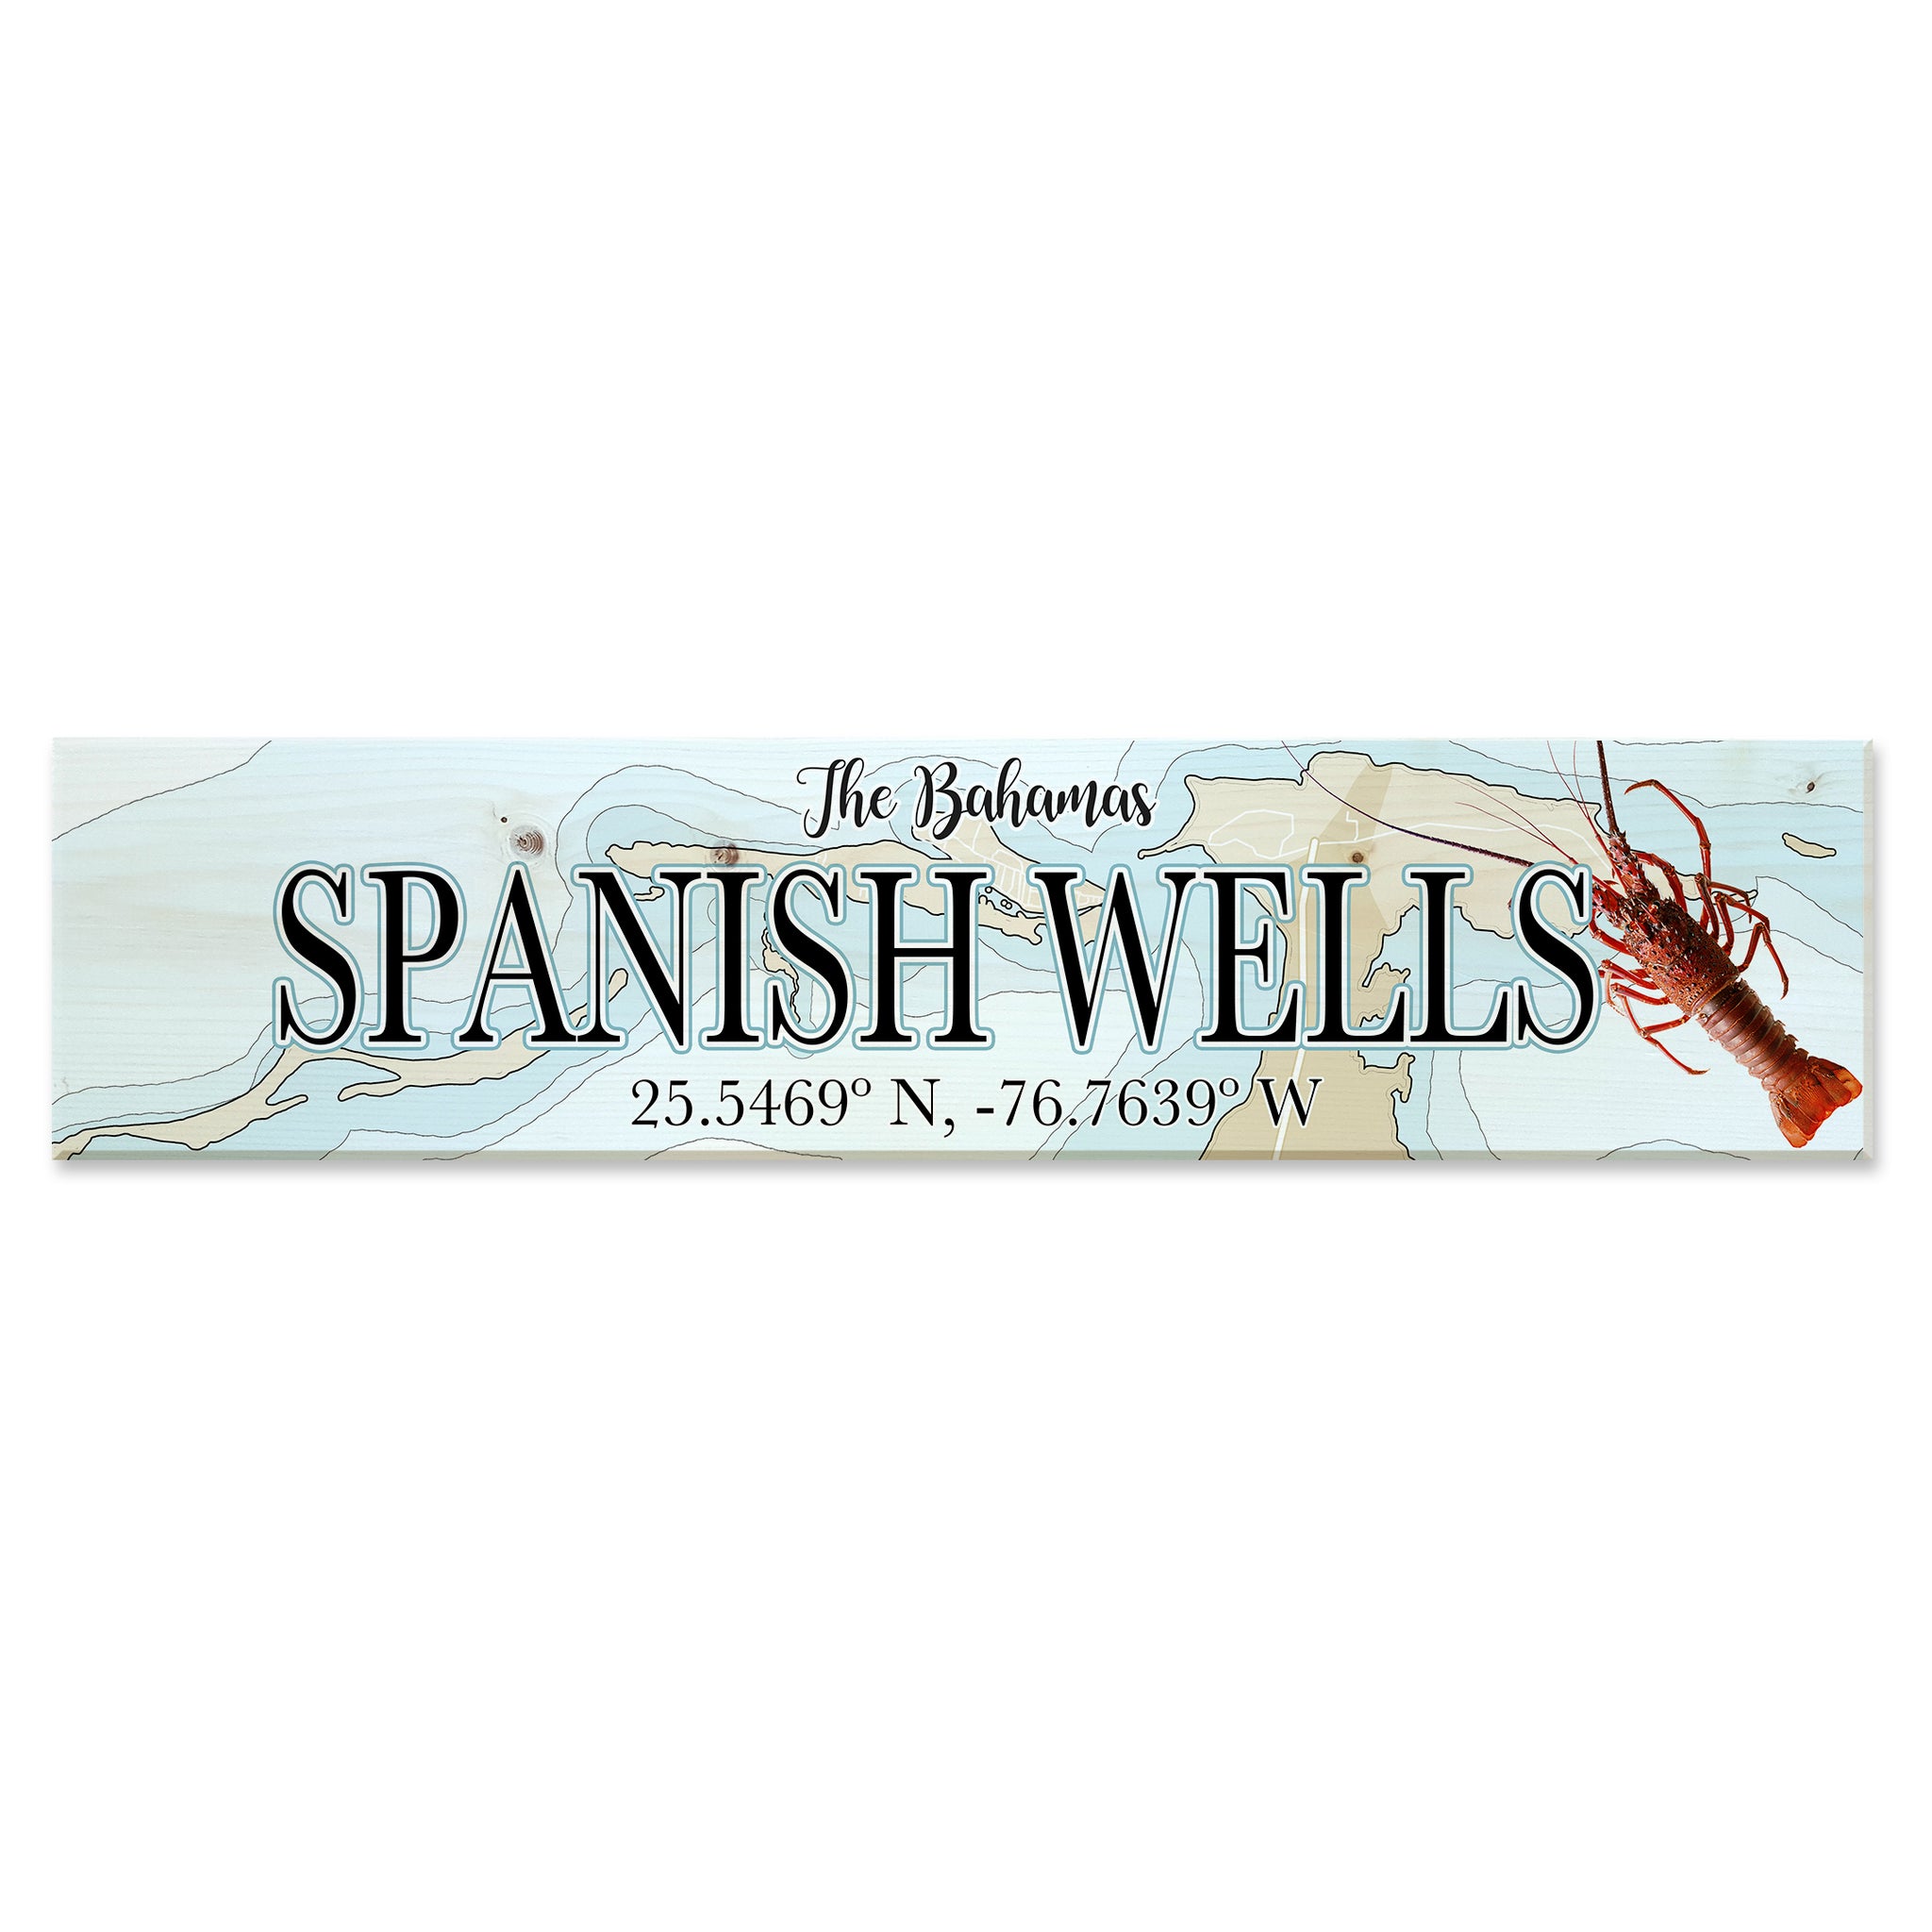 Spanish Wells, The Bahamas Coordinate Sign